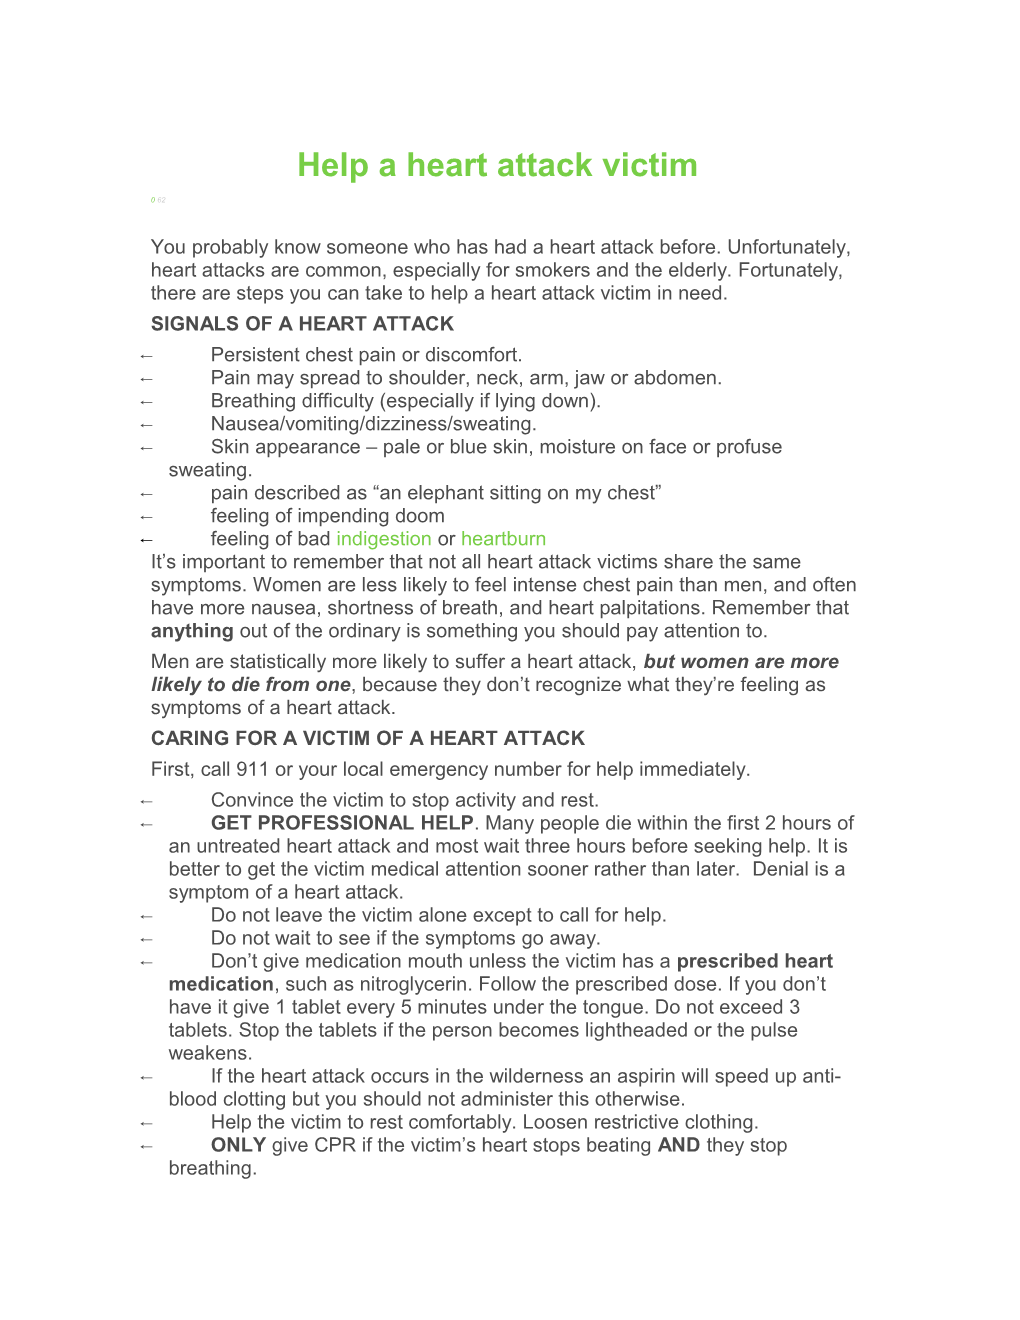 Help a Heart Attack Victim